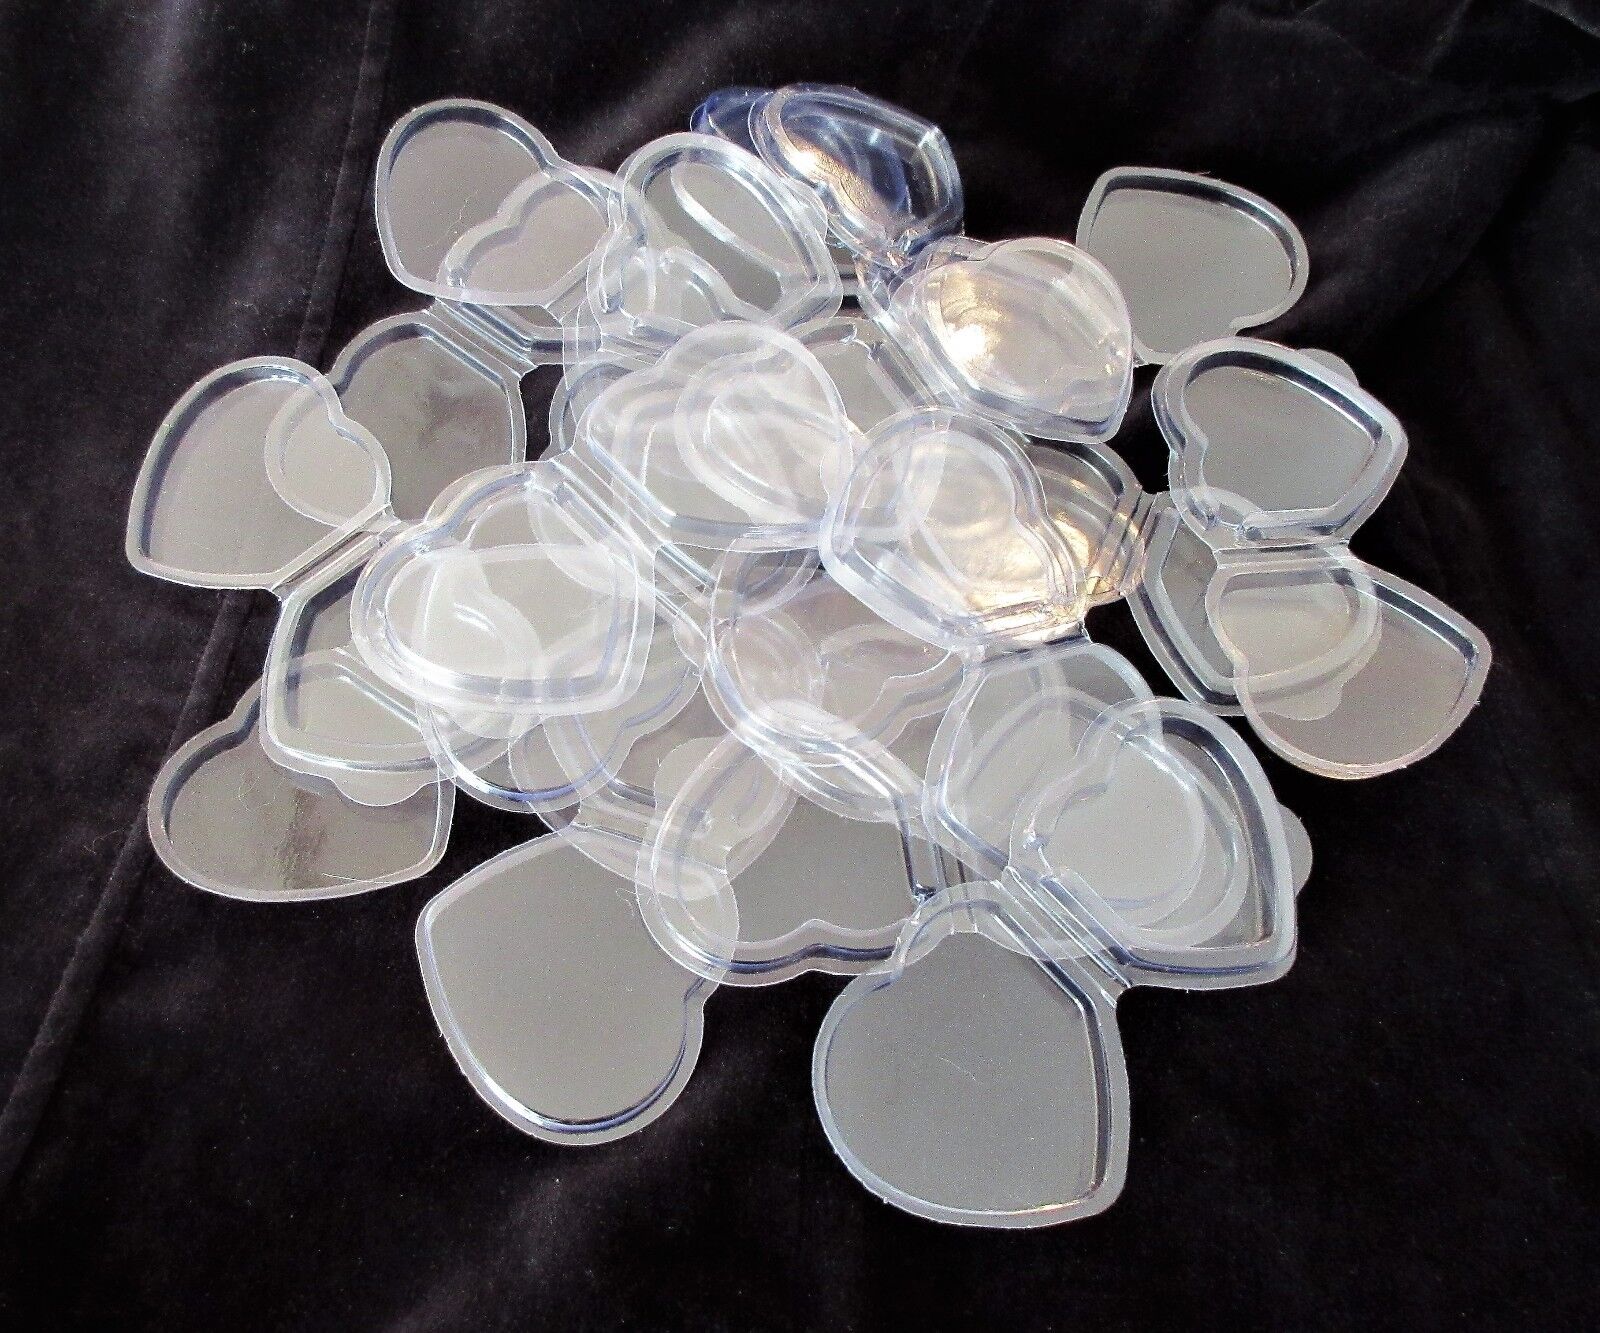 15 Beanie Baby Babies TY Hang Plastic Heart shaped Tag Protectors locket ProtectMyTags.com